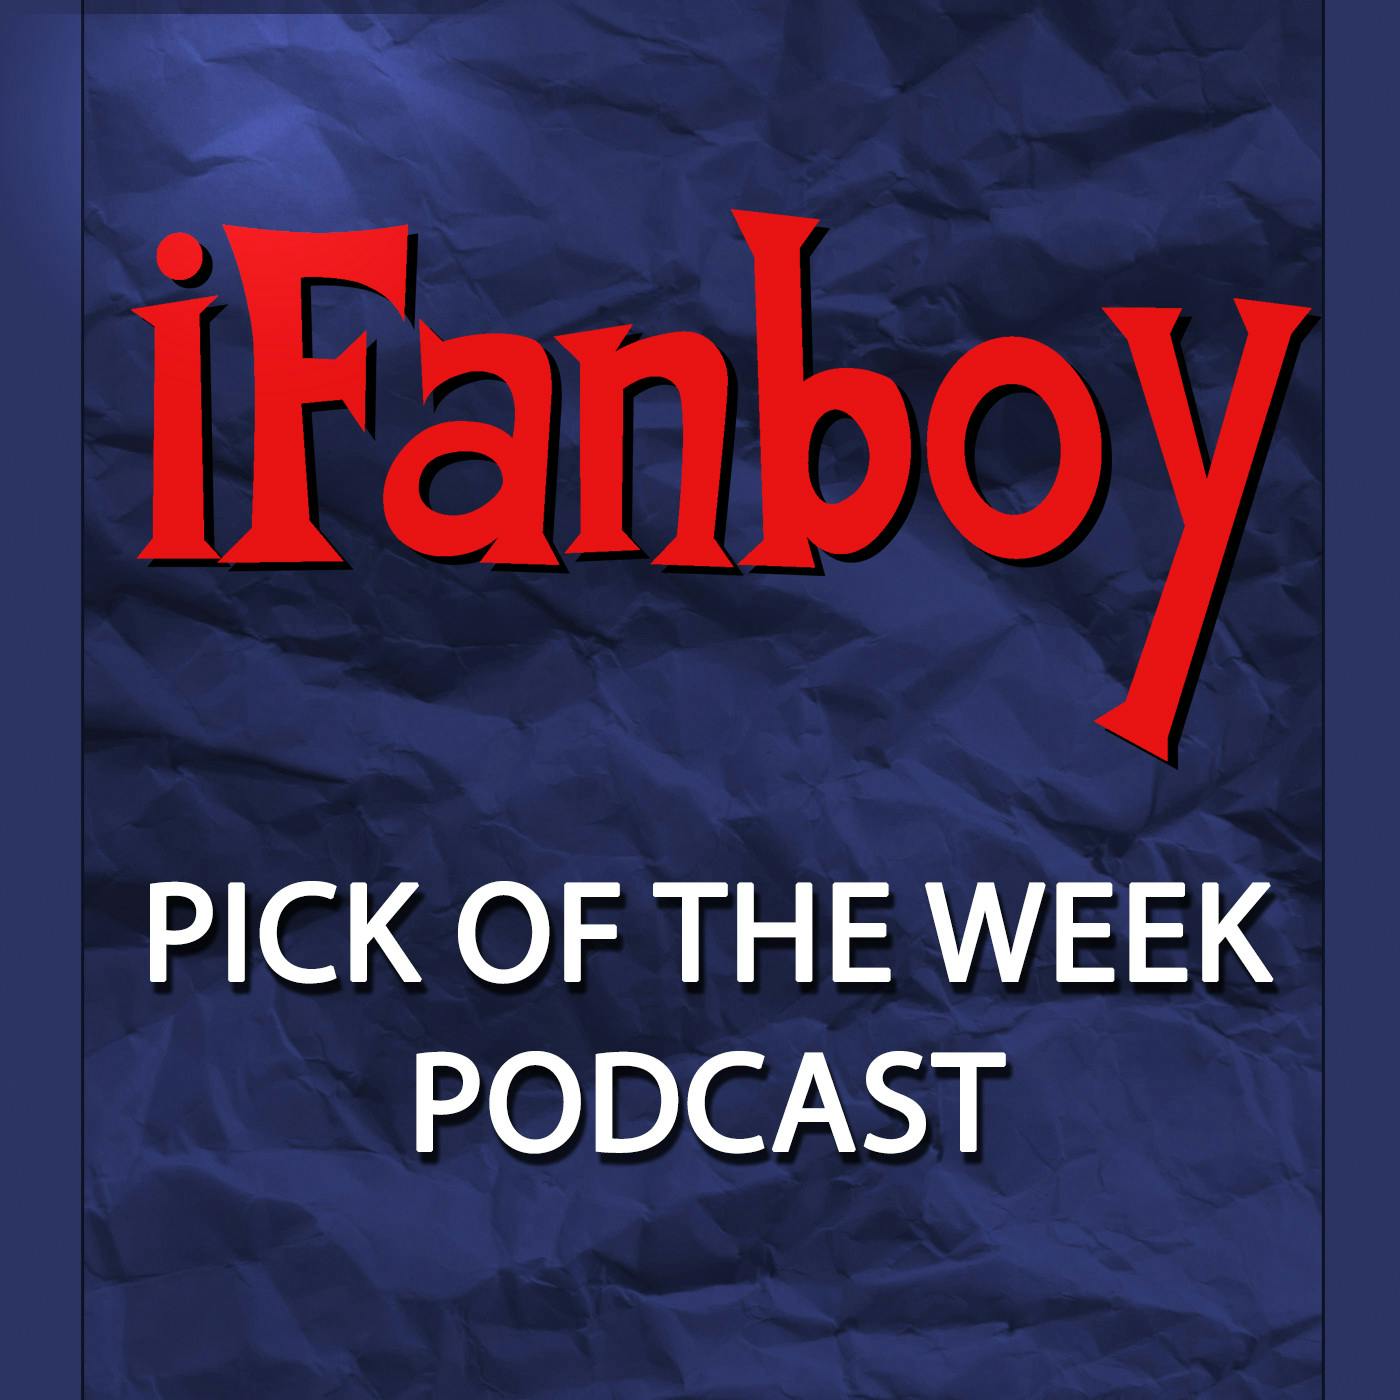 Pick of the Week #749 – Iron Man #1